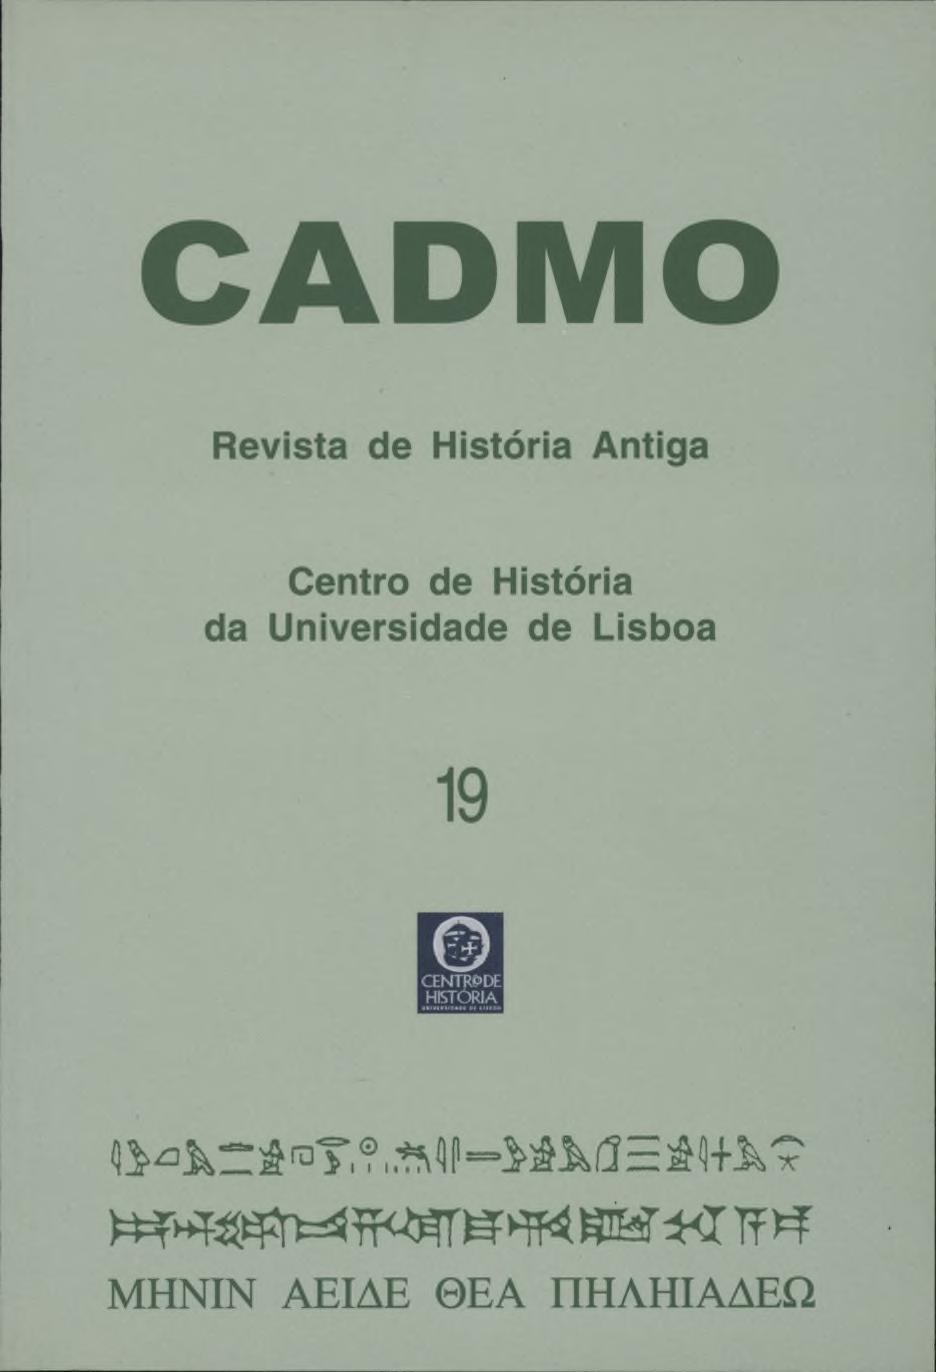 CADMO Revista de Historia Antiga Centro